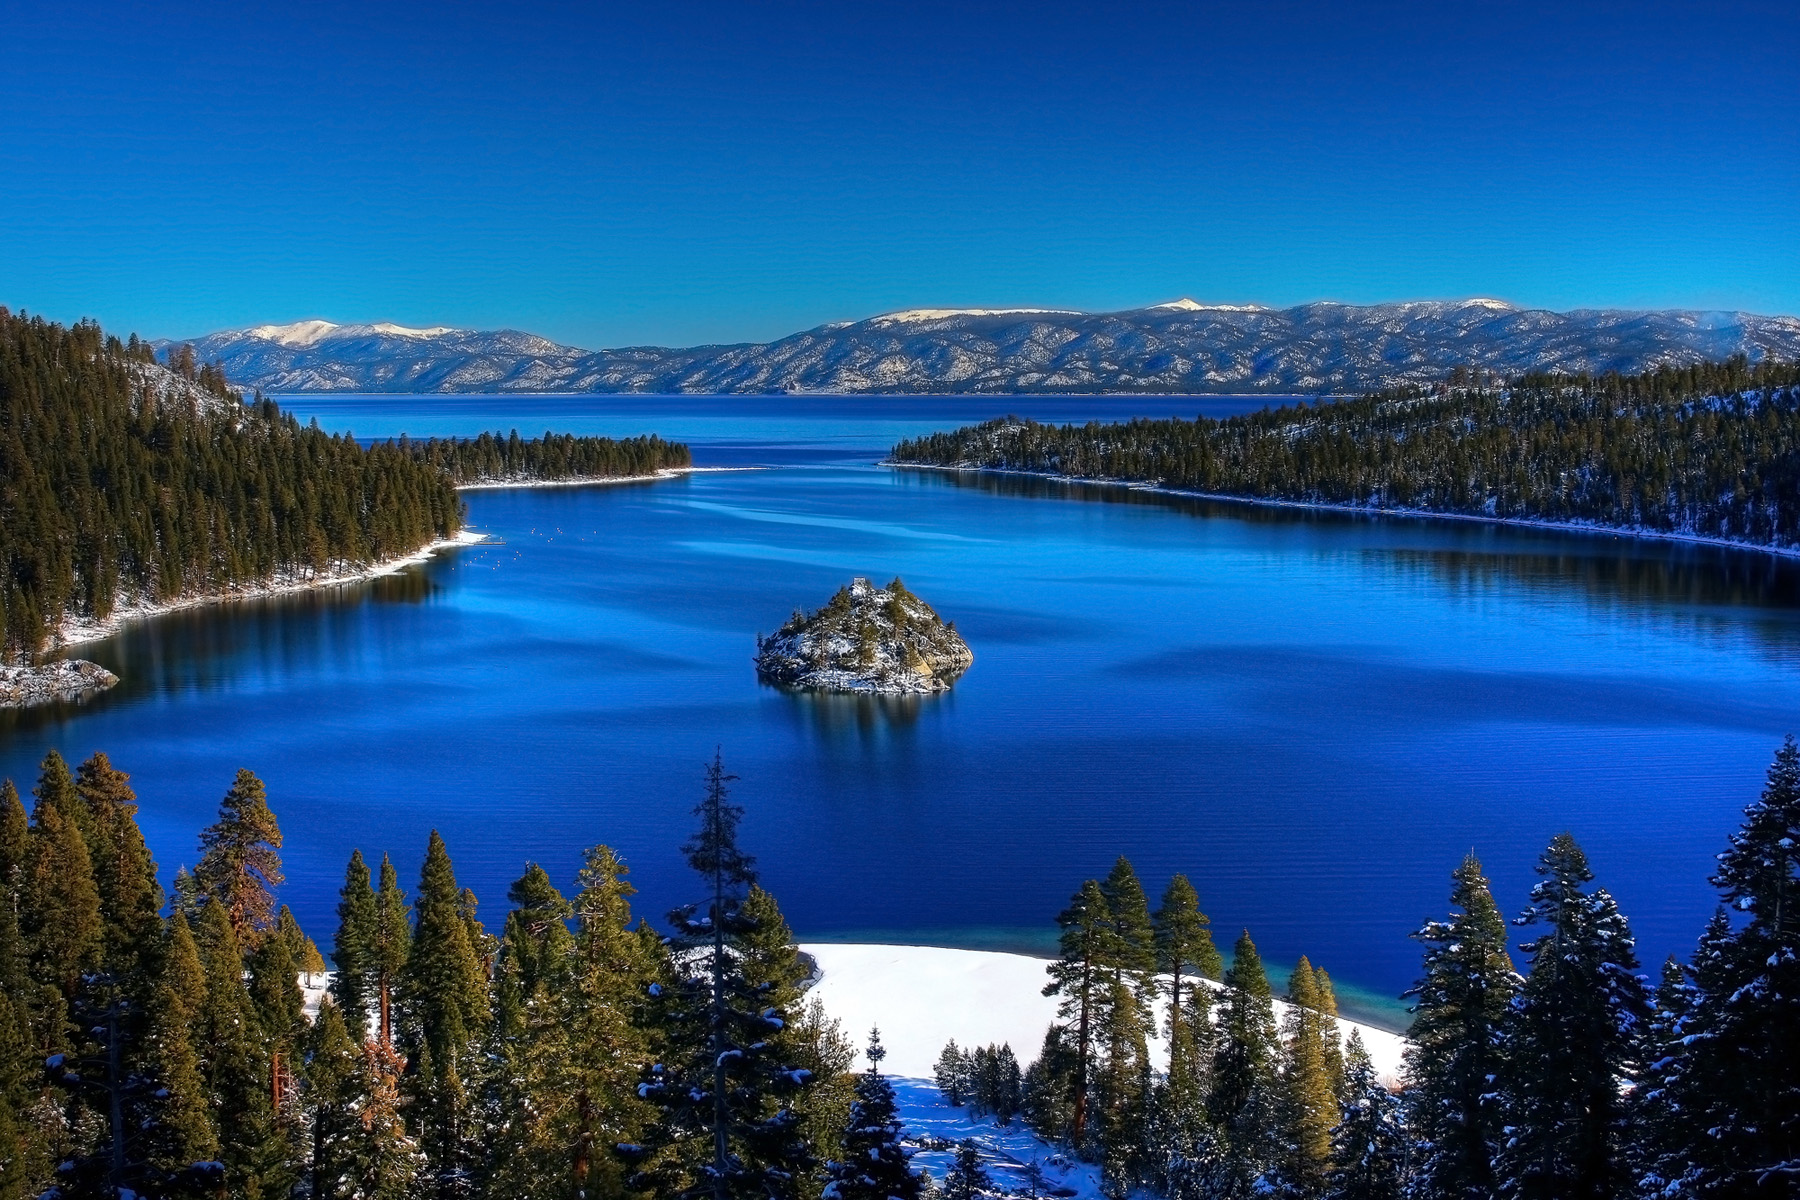 PBS Documentary: “Can We Save Lake Tahoe" - SnowBrains